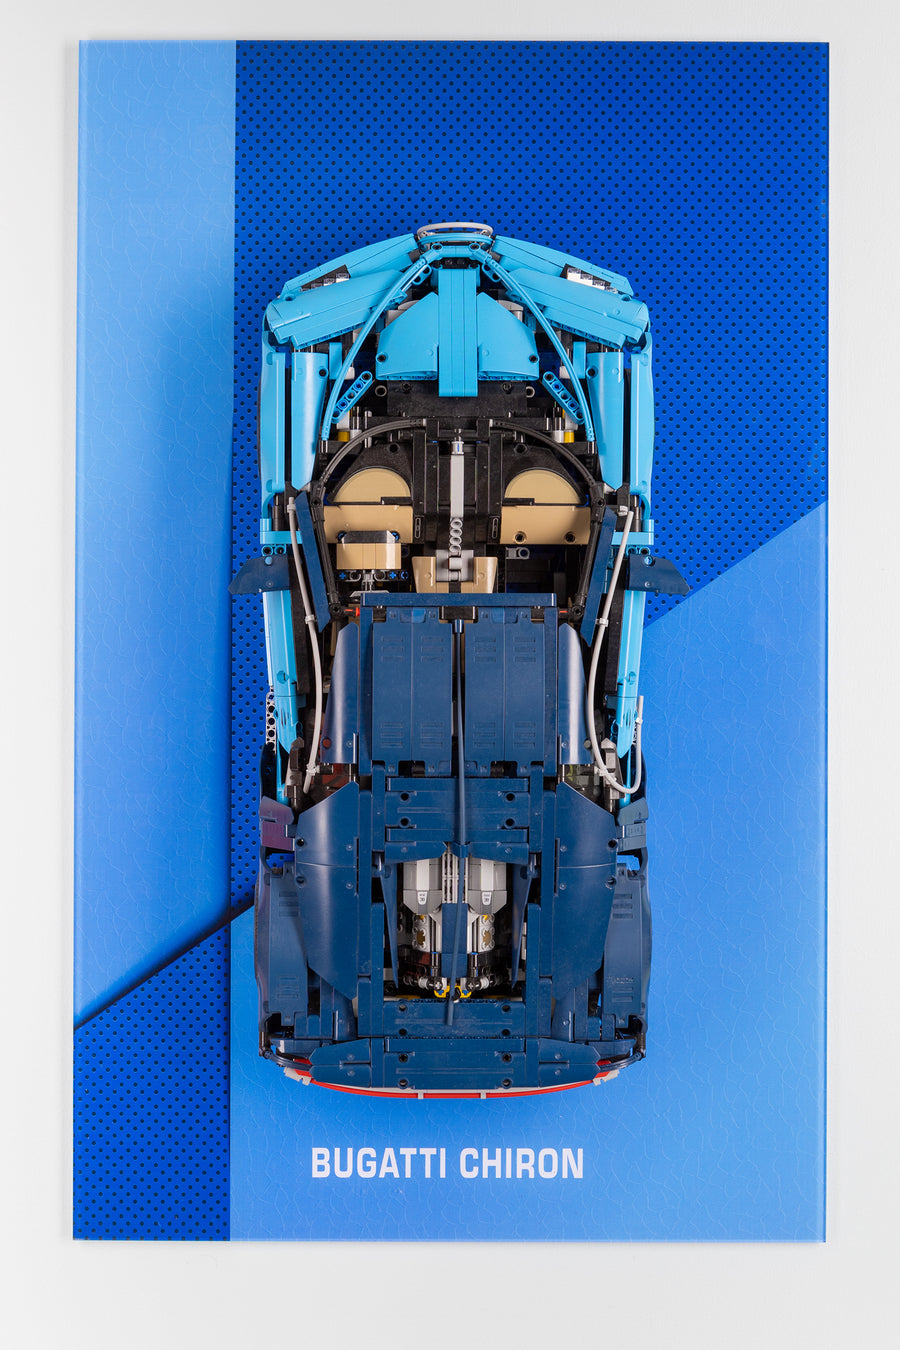 Wall Hanging Car Frame - Bugatti Chiron (42083)